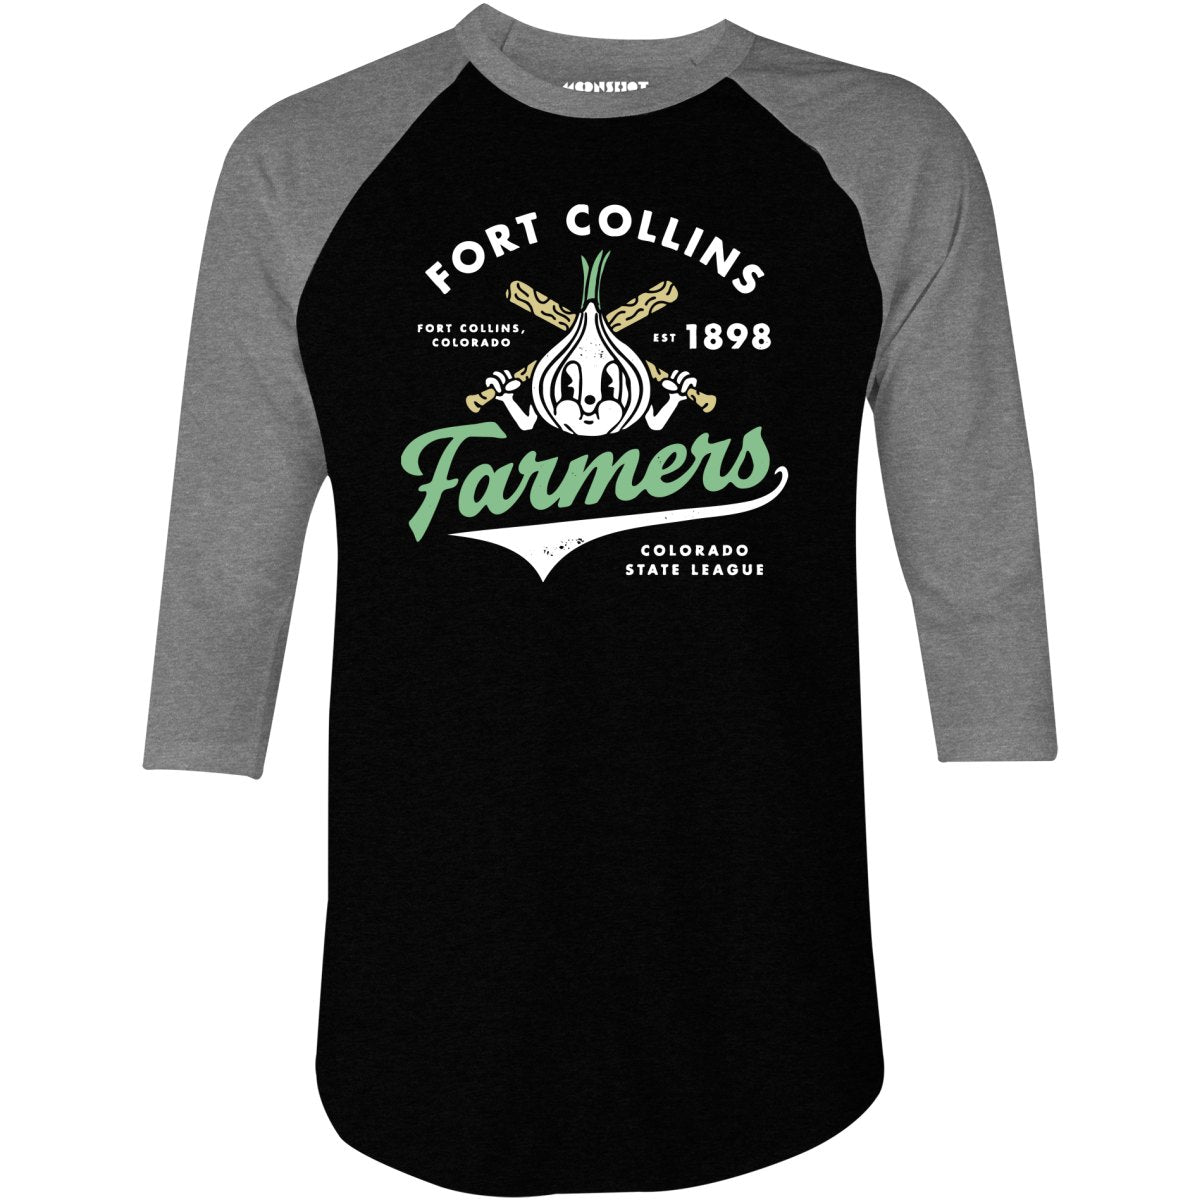 Fort Collins Farmers - Colorado - Vintage Defunct Baseball Teams - 3/4 Sleeve Raglan T-Shirt